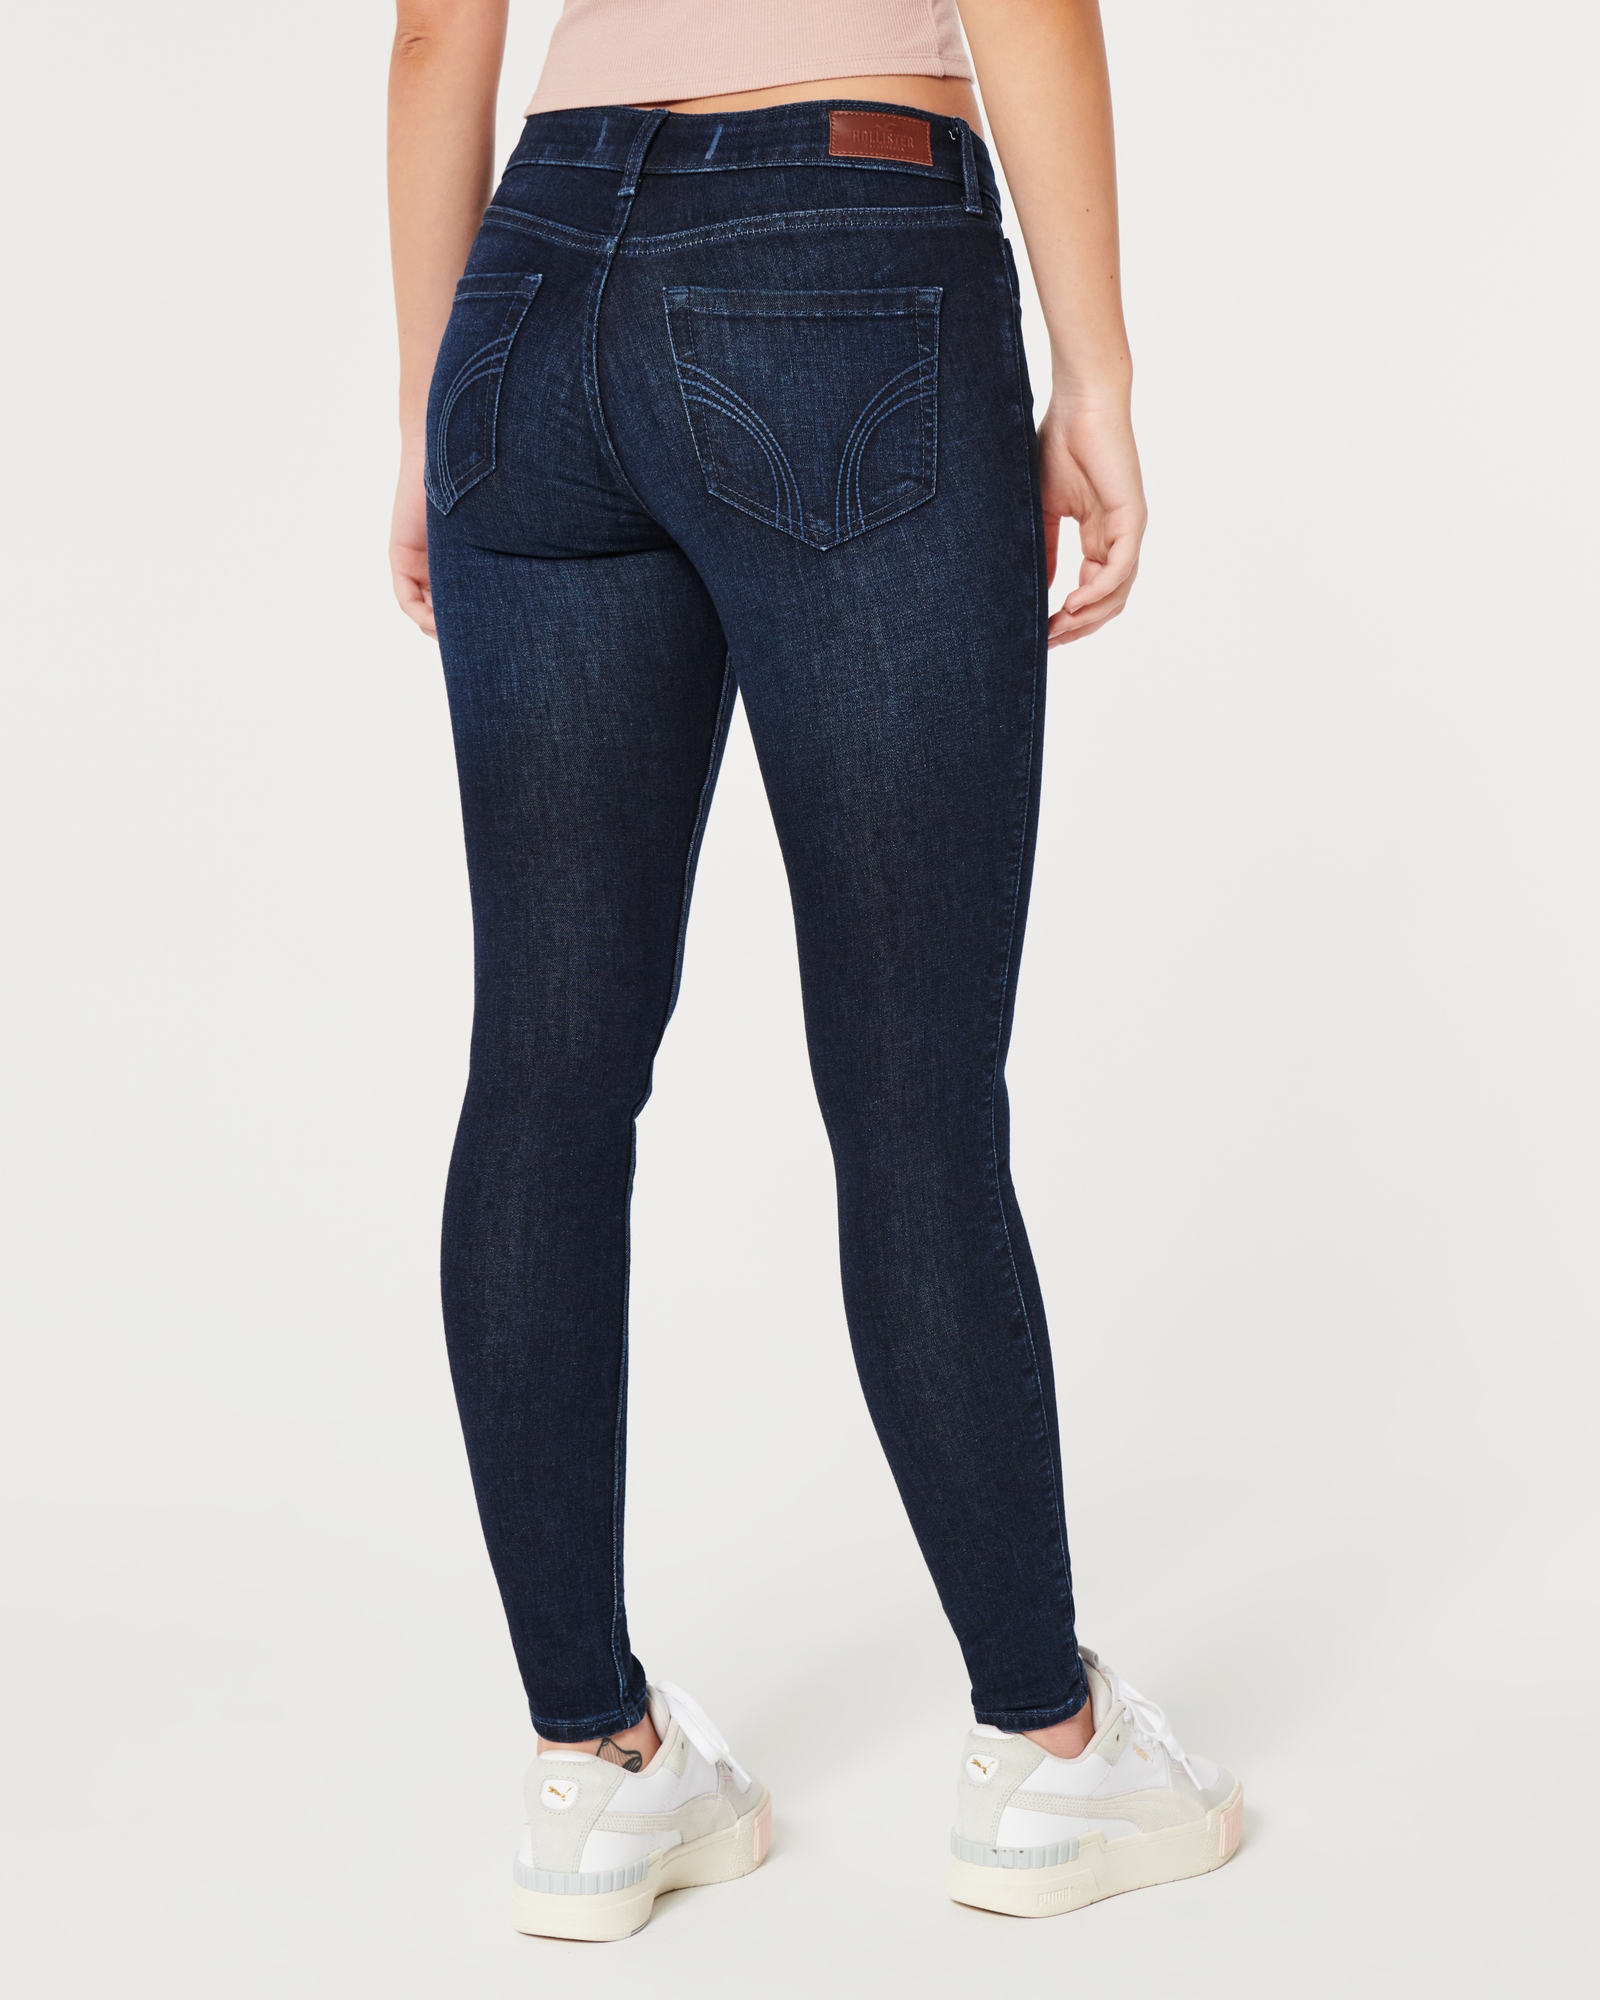 Hollister Womens Super Skinny Jeans Dark Wash 